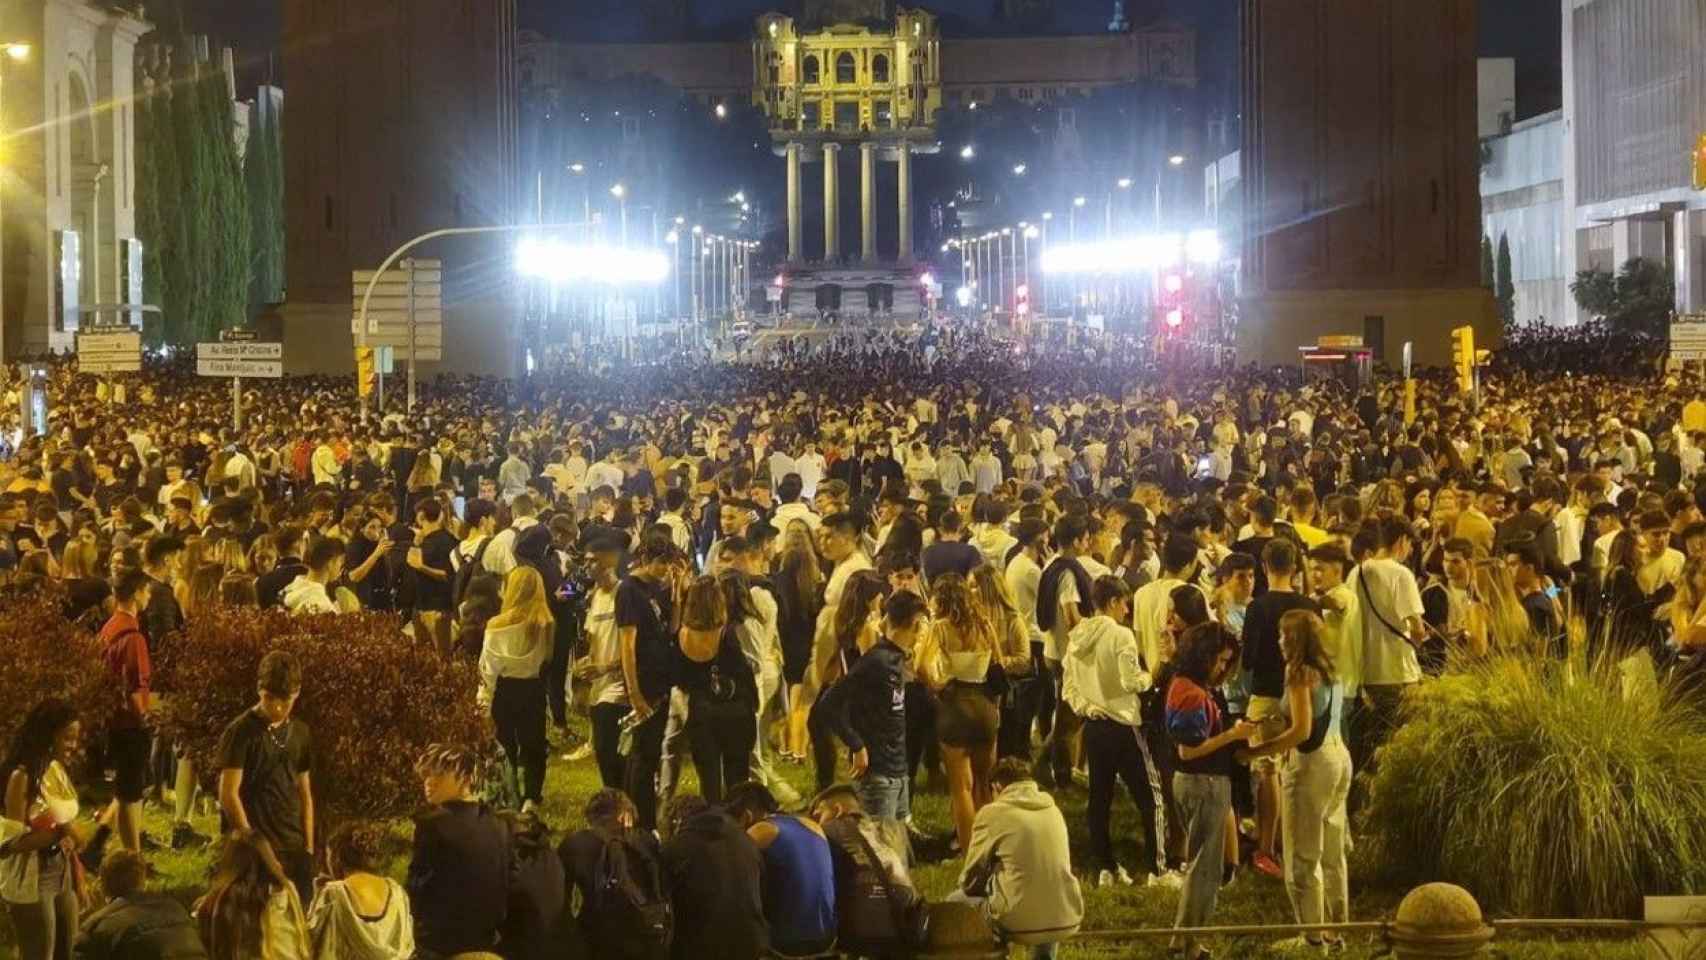 Macrobotellón en plaza Espanya durante las fiestas de la Mercè / EUROPA PRESS